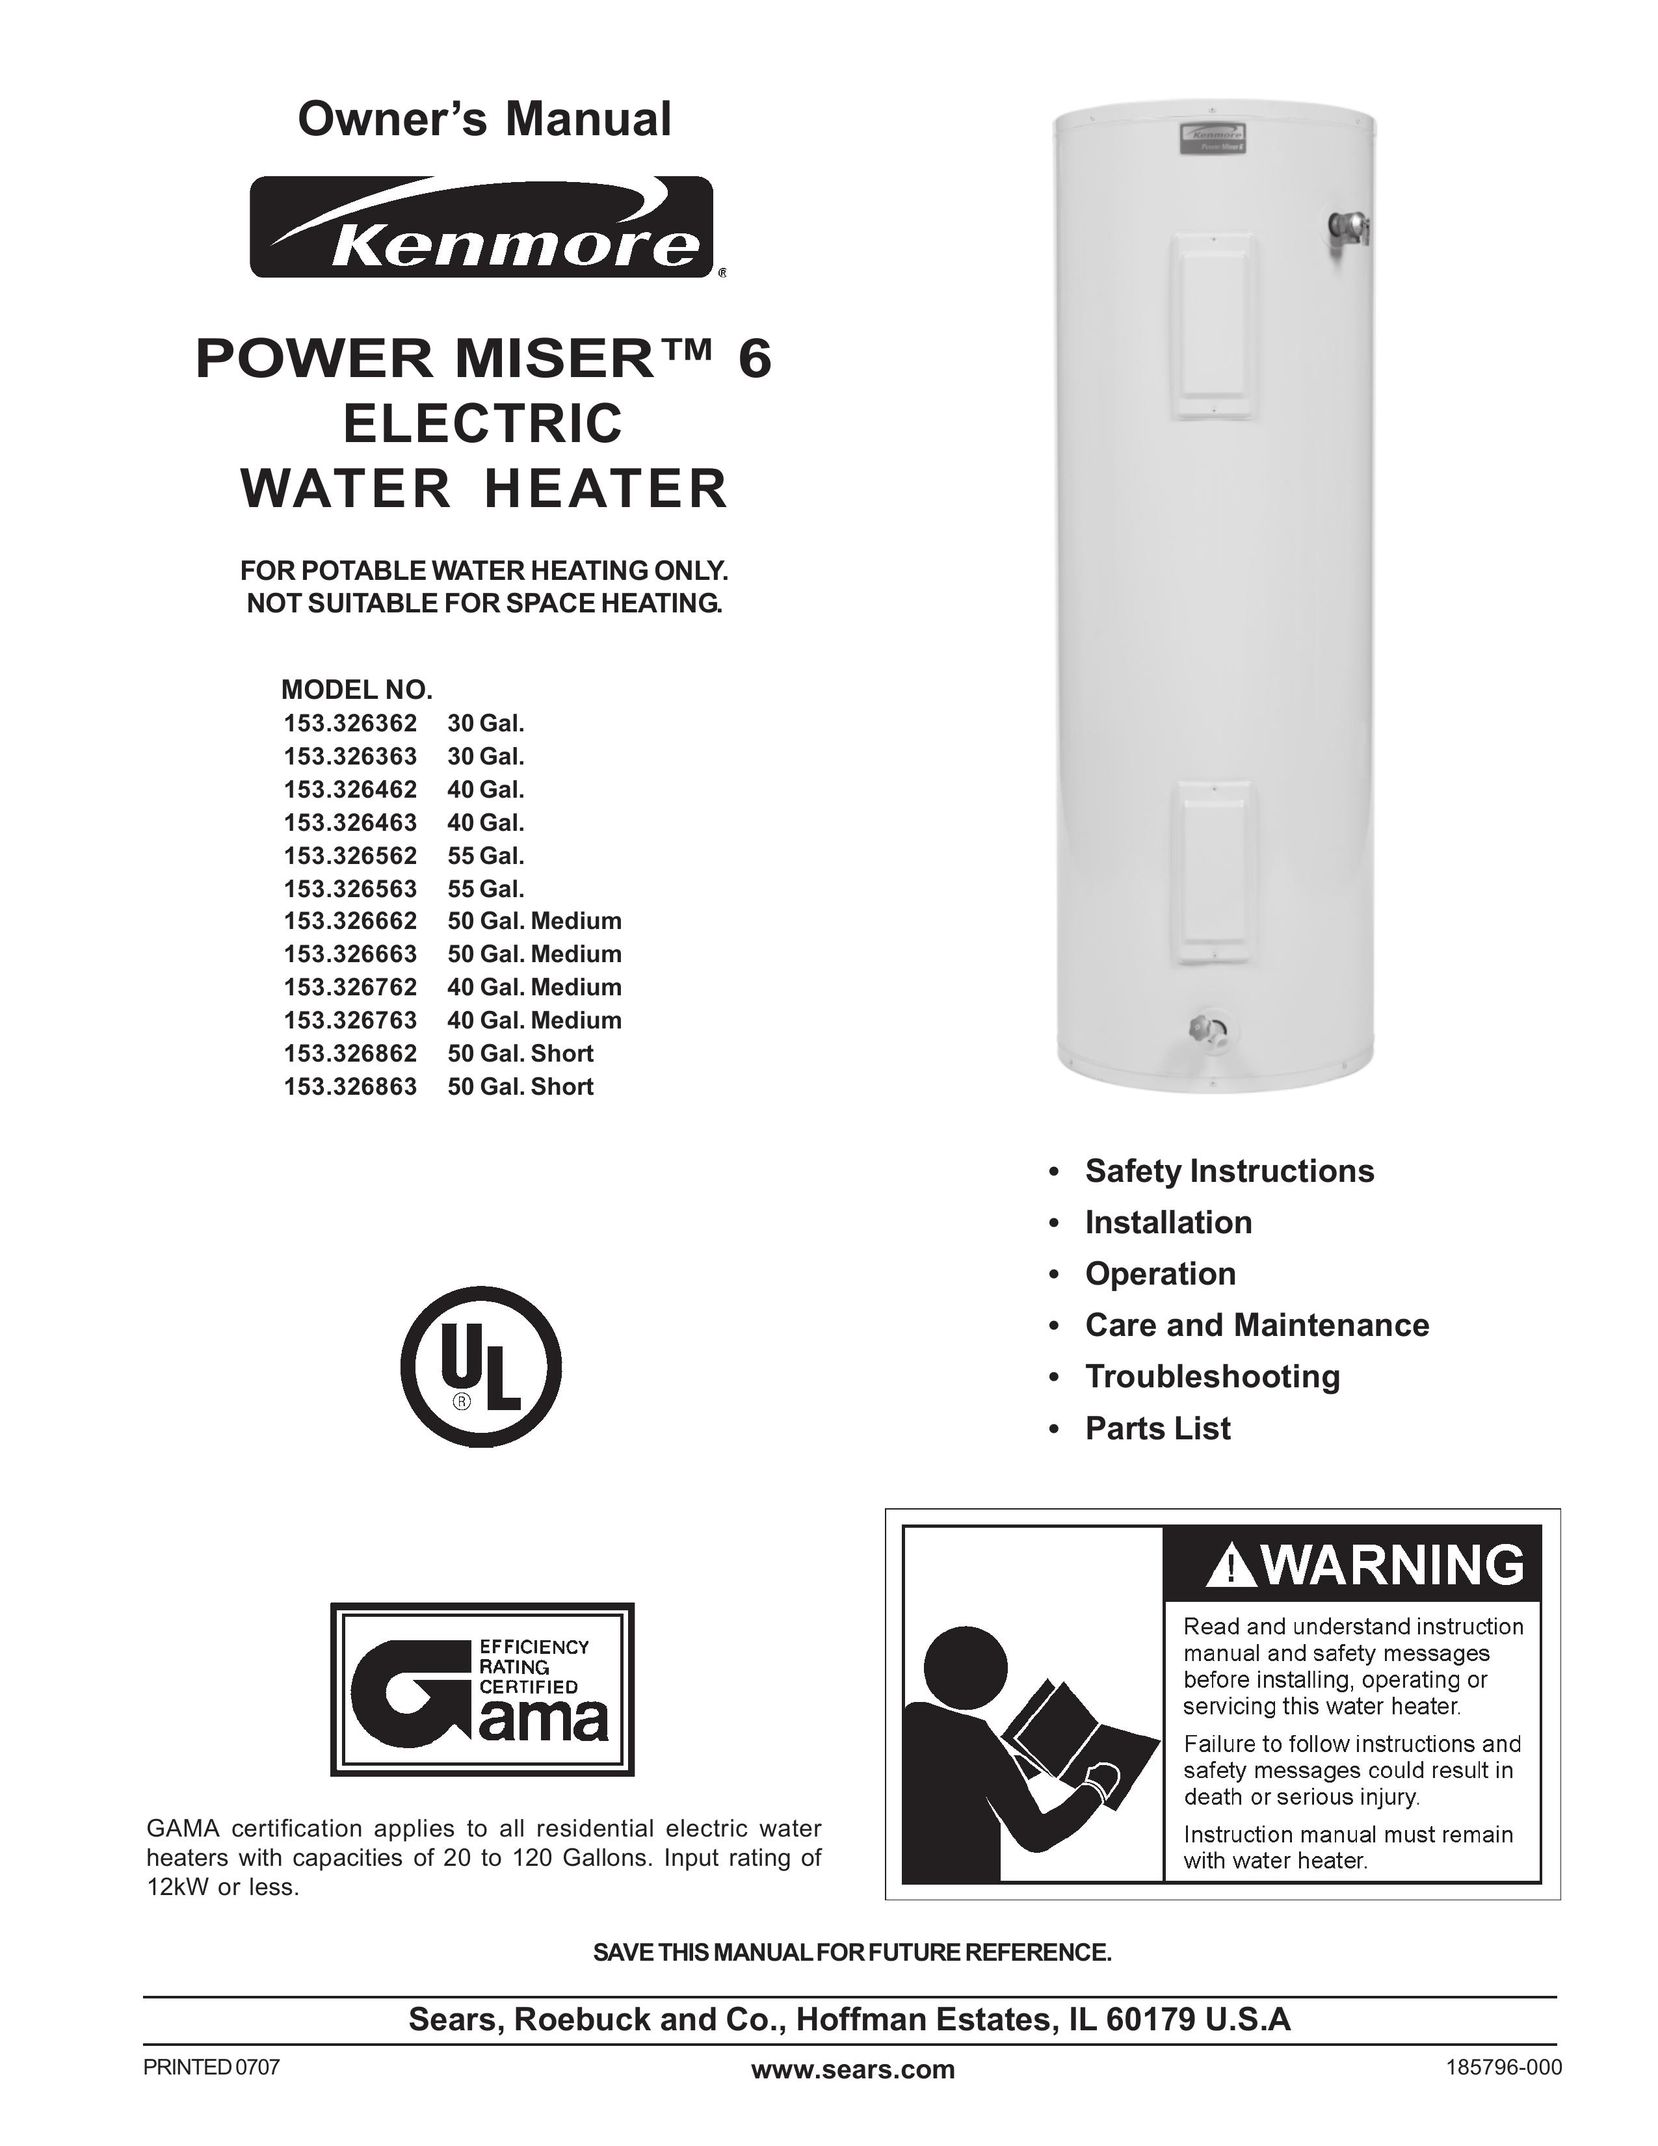 Sears 153.326862 50 GAL. SHORT Water Heater User Manual